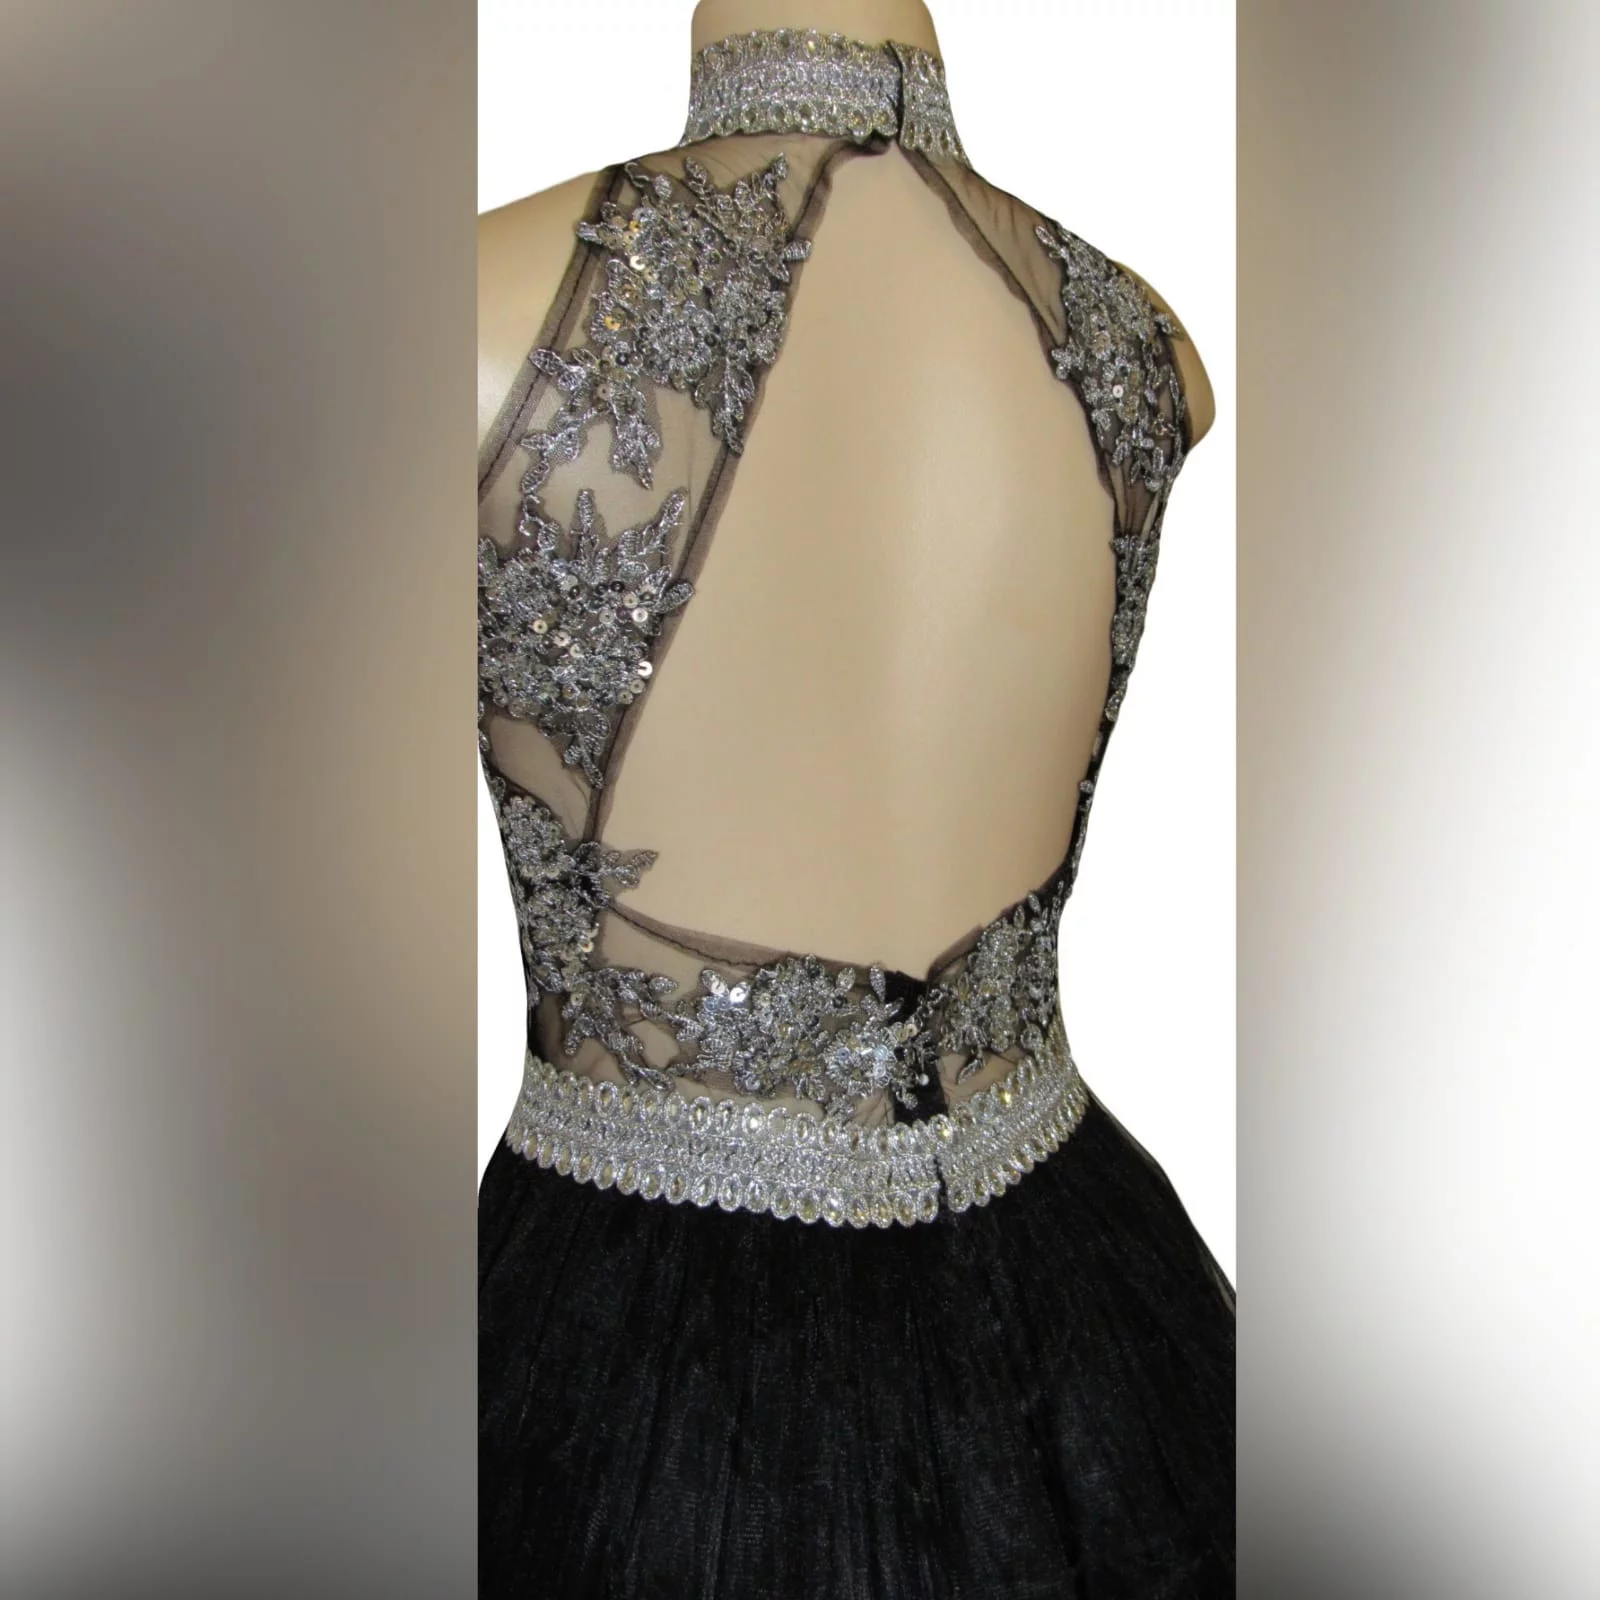 Black & silver long elegant prom dress 3 black & silver, long & elegant prom dance dress with a triangular open back. Choker neckline and an under bust bling belt with train.